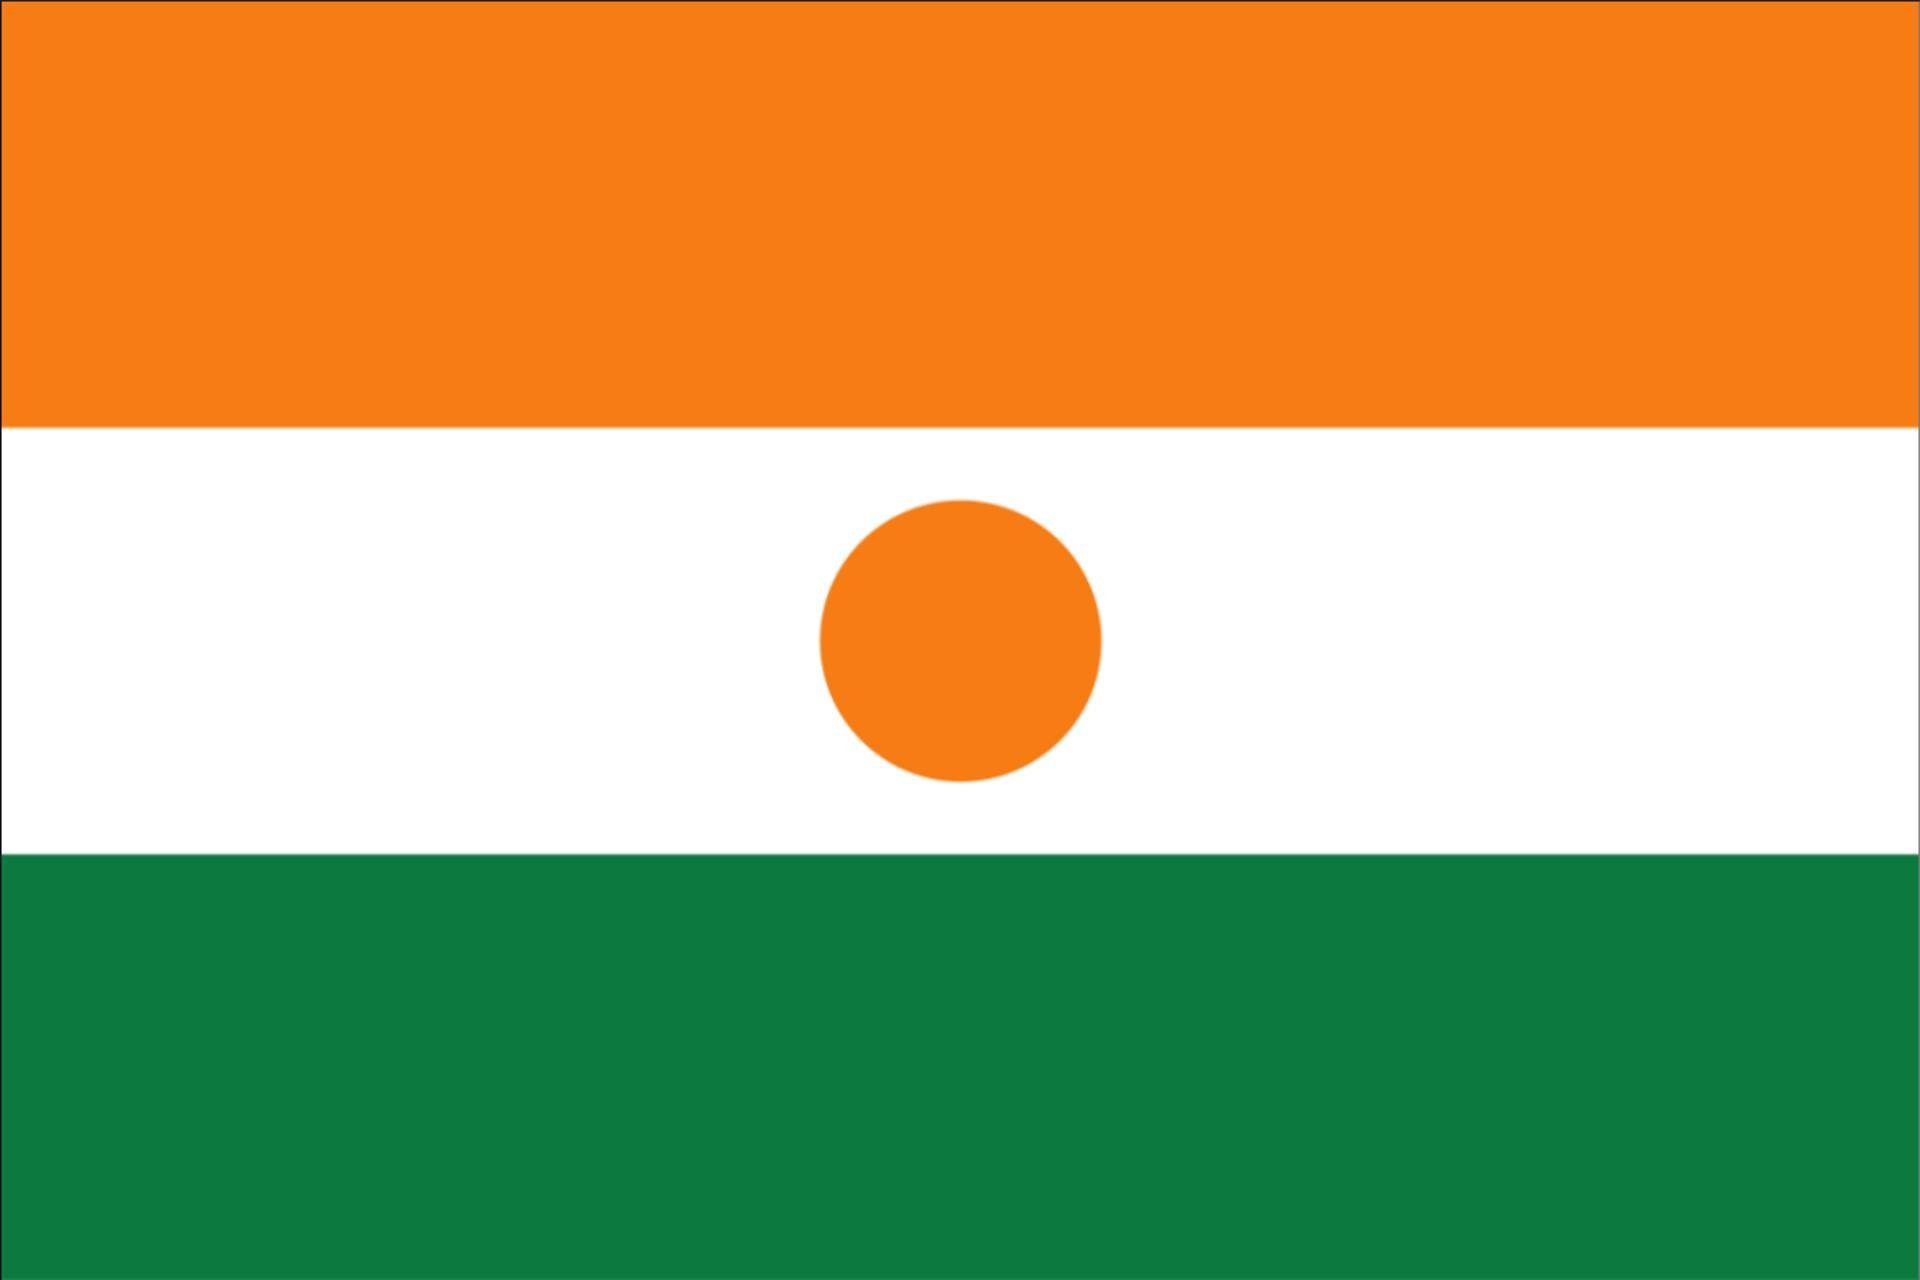 80 Flagge g/m² flaggenmeer Niger